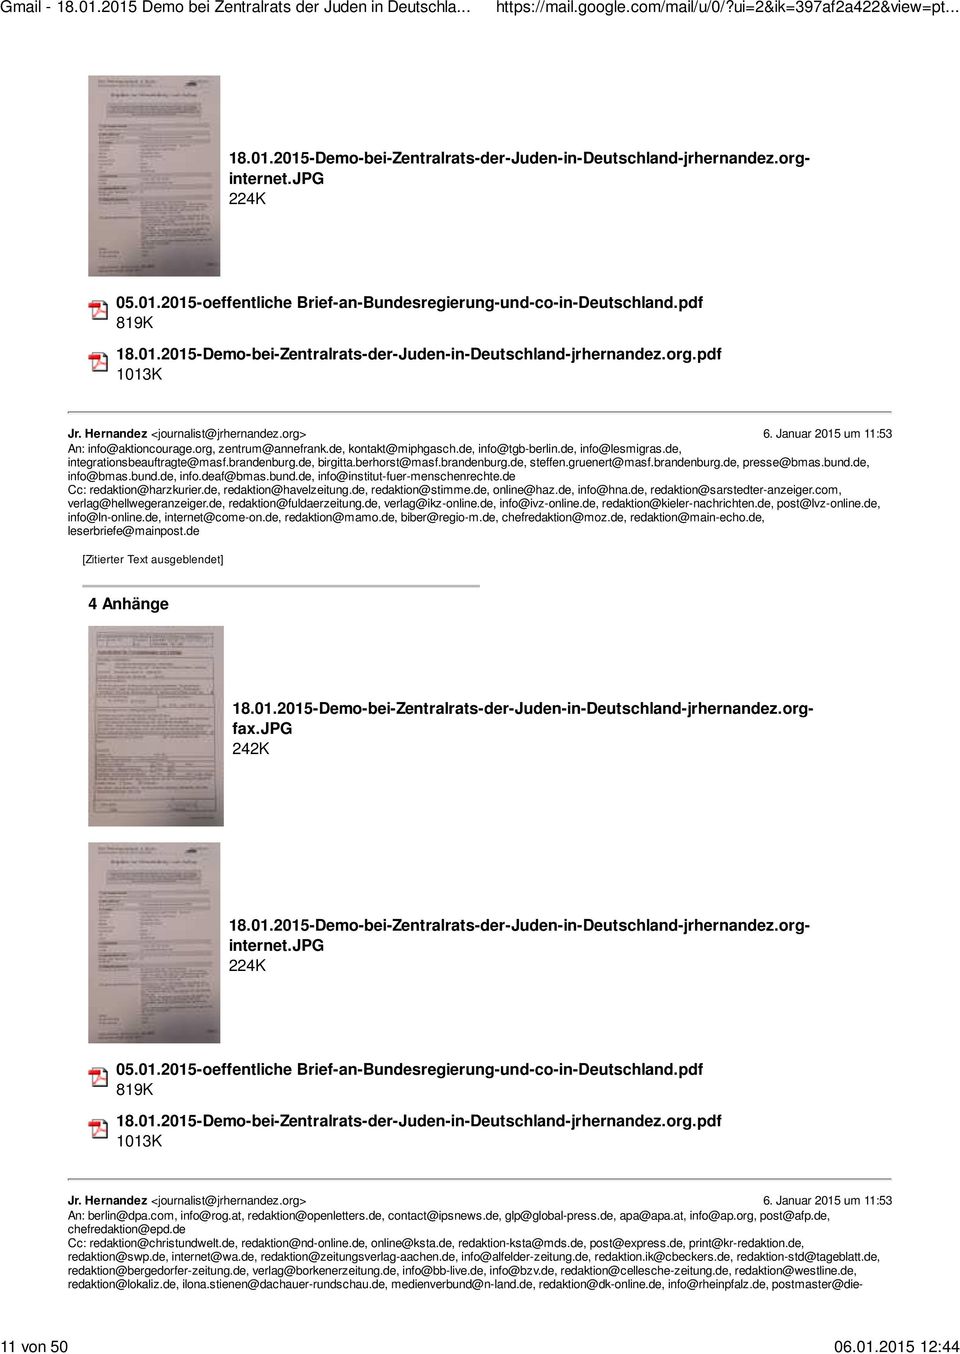 brandenburg.de, steffen.gruenert@masf.brandenburg.de, presse@bmas.bund.de, info@bmas.bund.de, info.deaf@bmas.bund.de, info@institut-fuer-menschenrechte.de Cc: redaktion@harzkurier.